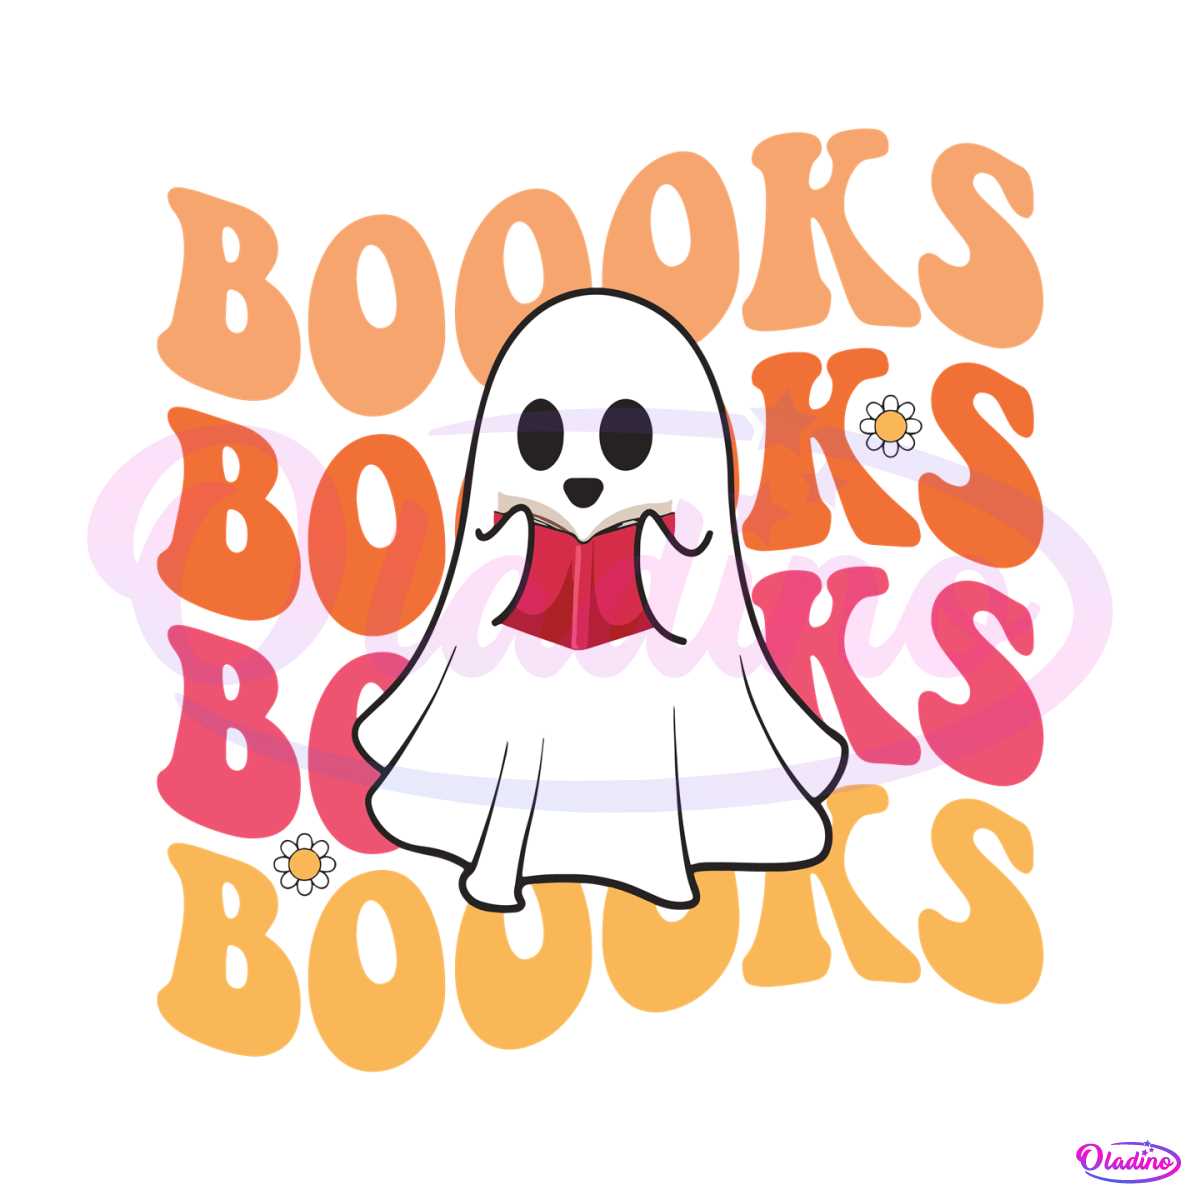 ghost-books-halloween-shirt-for-books-lover-svg-file-for-cricut